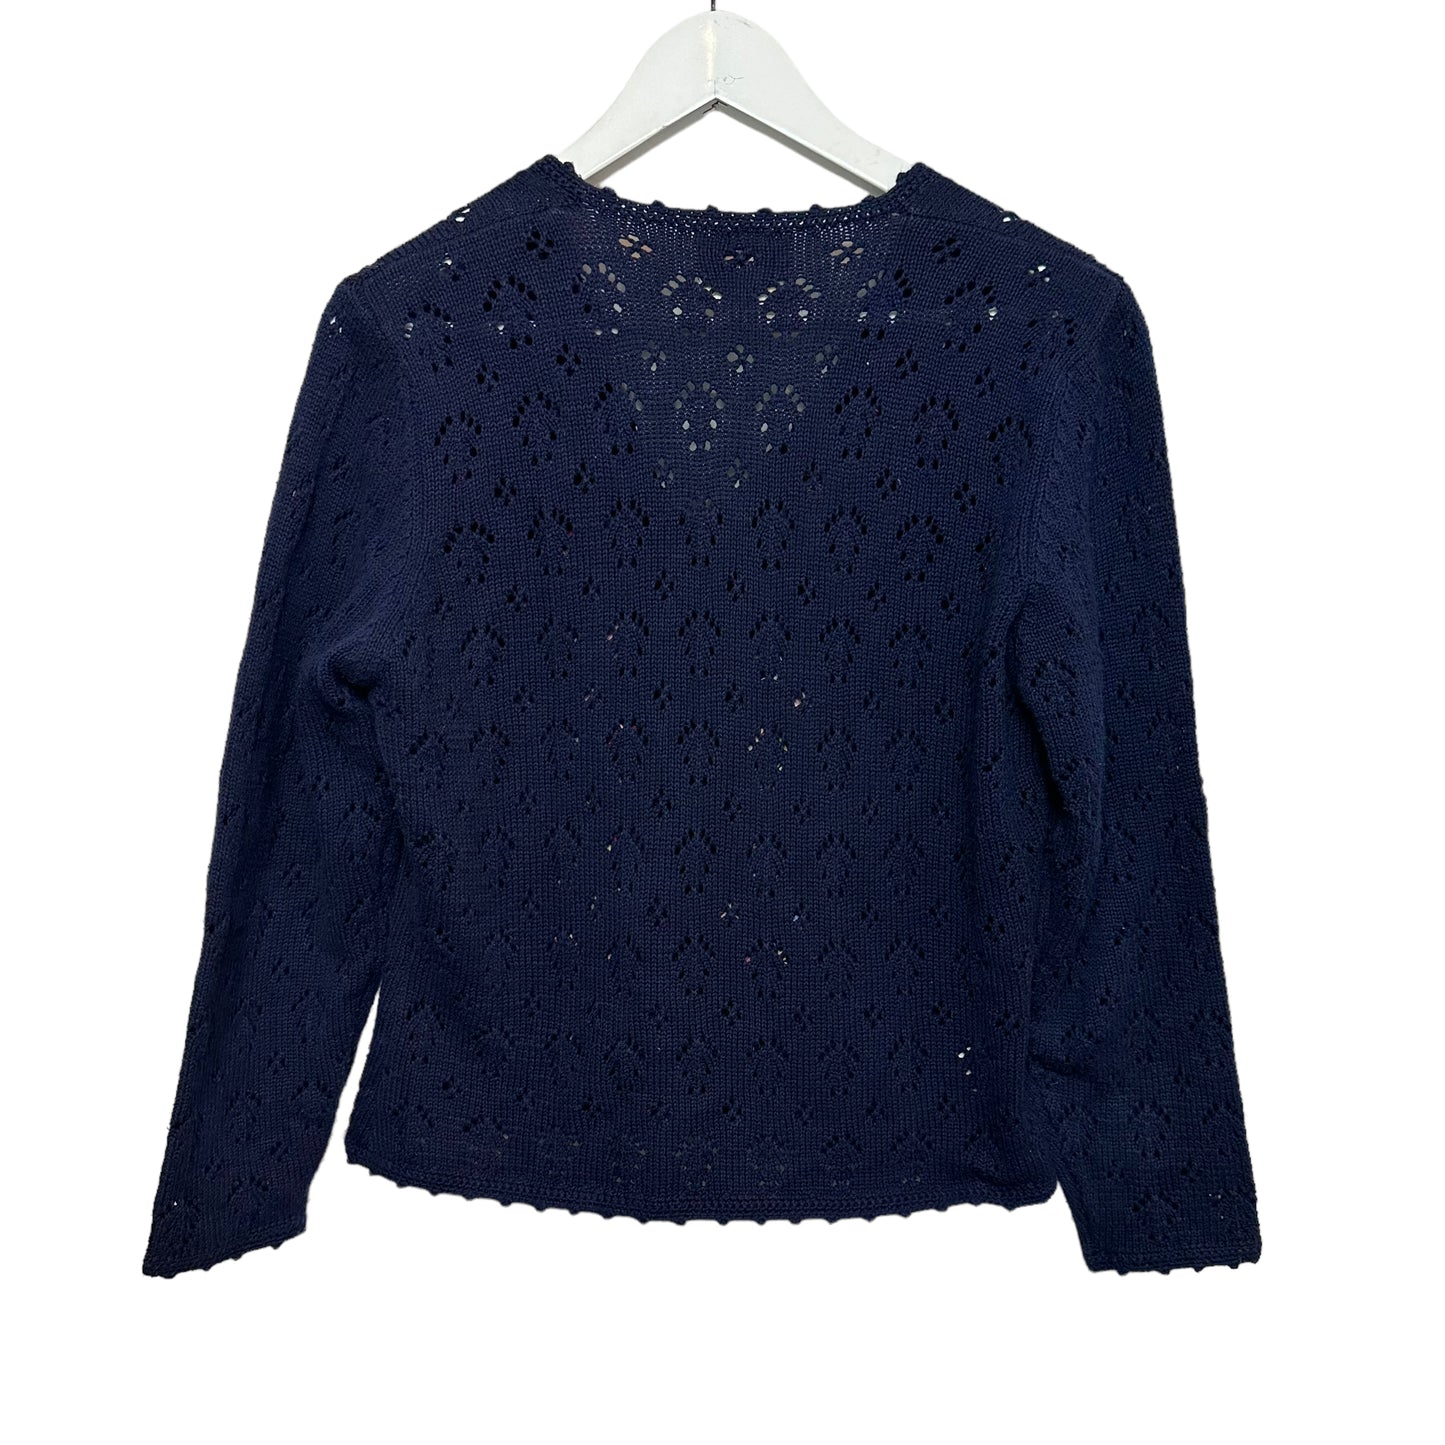 Vintage 90s Susan Bristol Navy Blue Cardigan Sweater Embroidered Flowers Medium